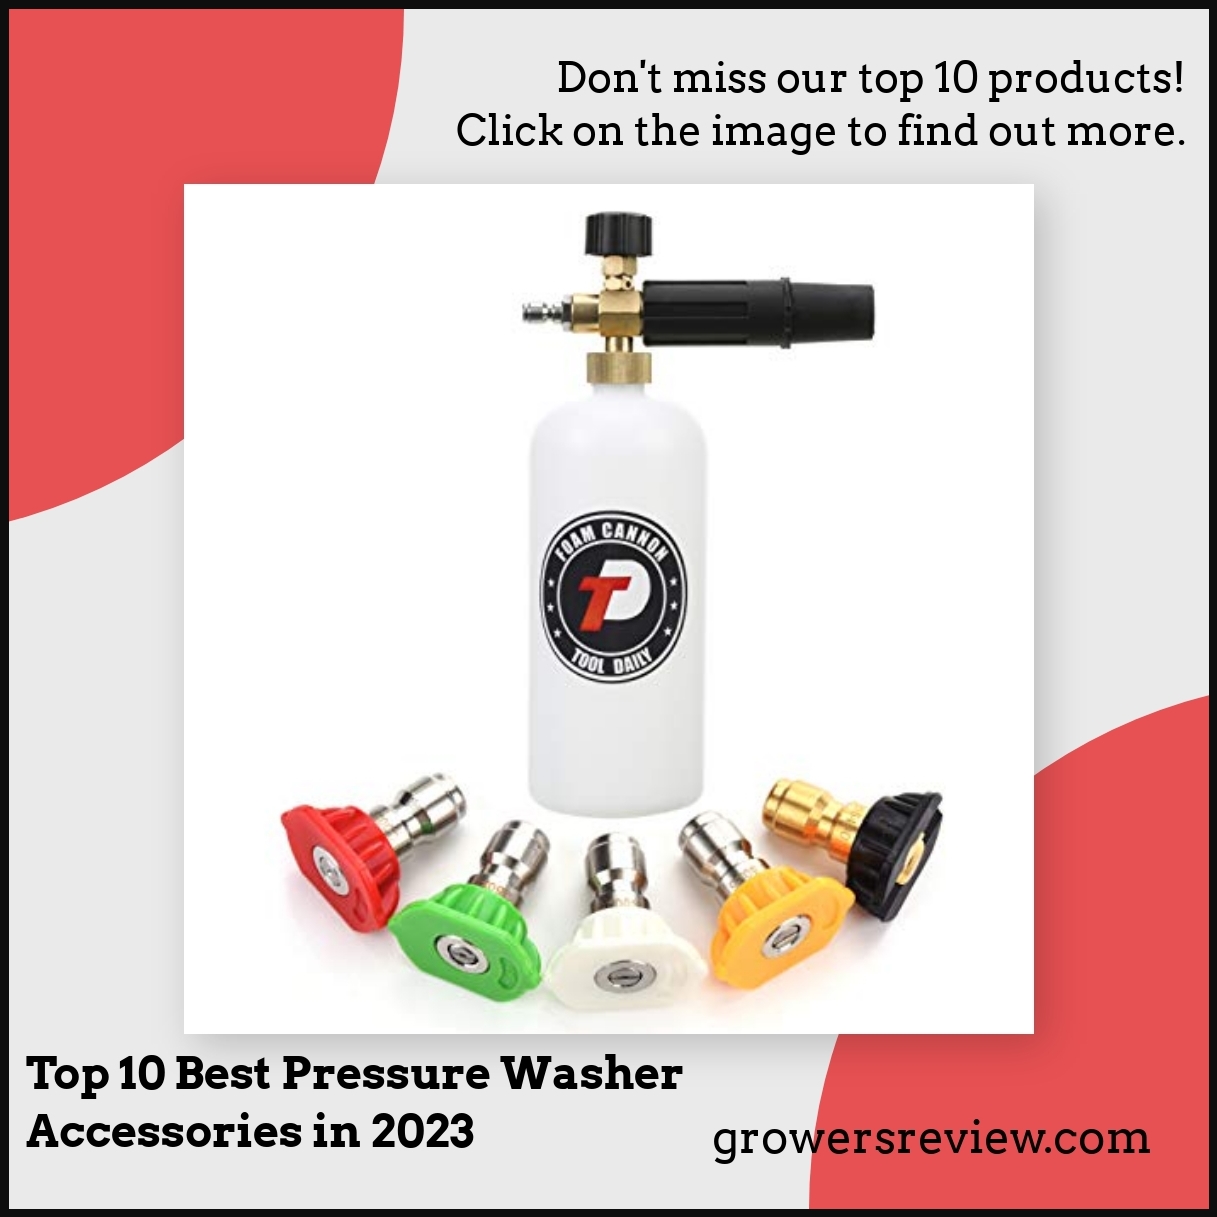 Top 10 Best Pressure Washer Accessories in 2023